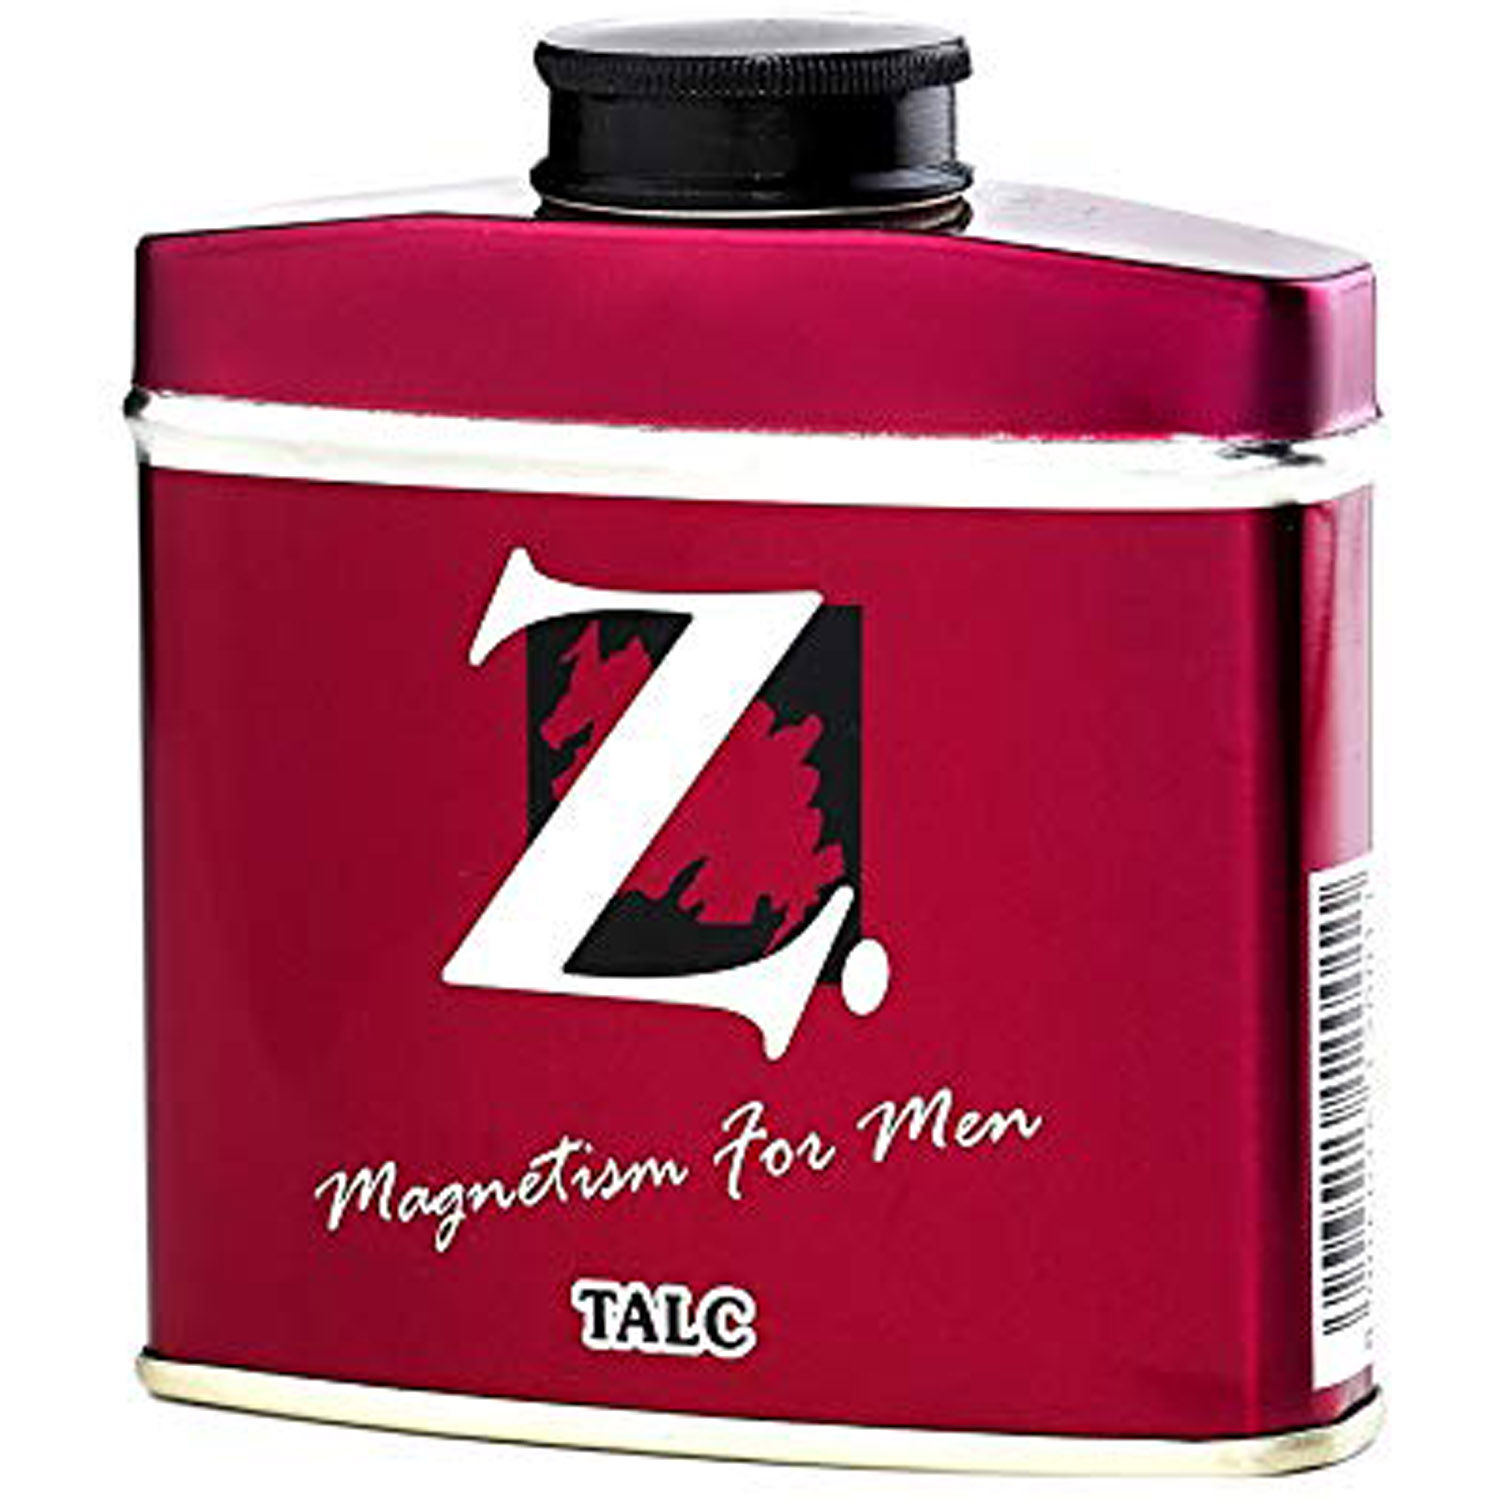 Z Magnetism Men Talcum Powder, 50 gm, Pack of 1 